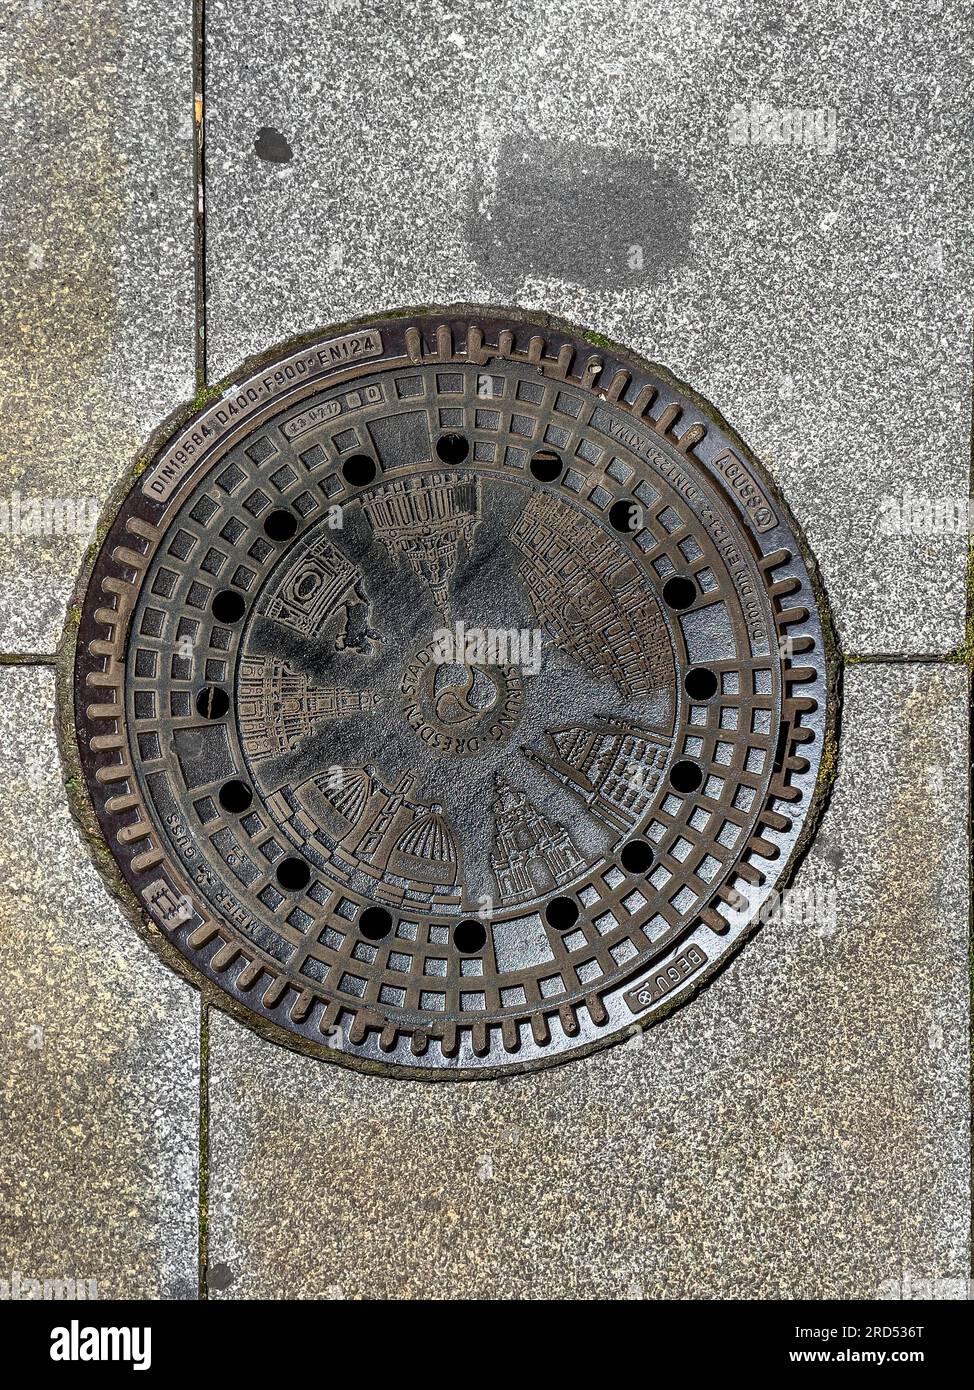 Old town manhole cover -Fotos und -Bildmaterial in hoher Auflösung – Alamy